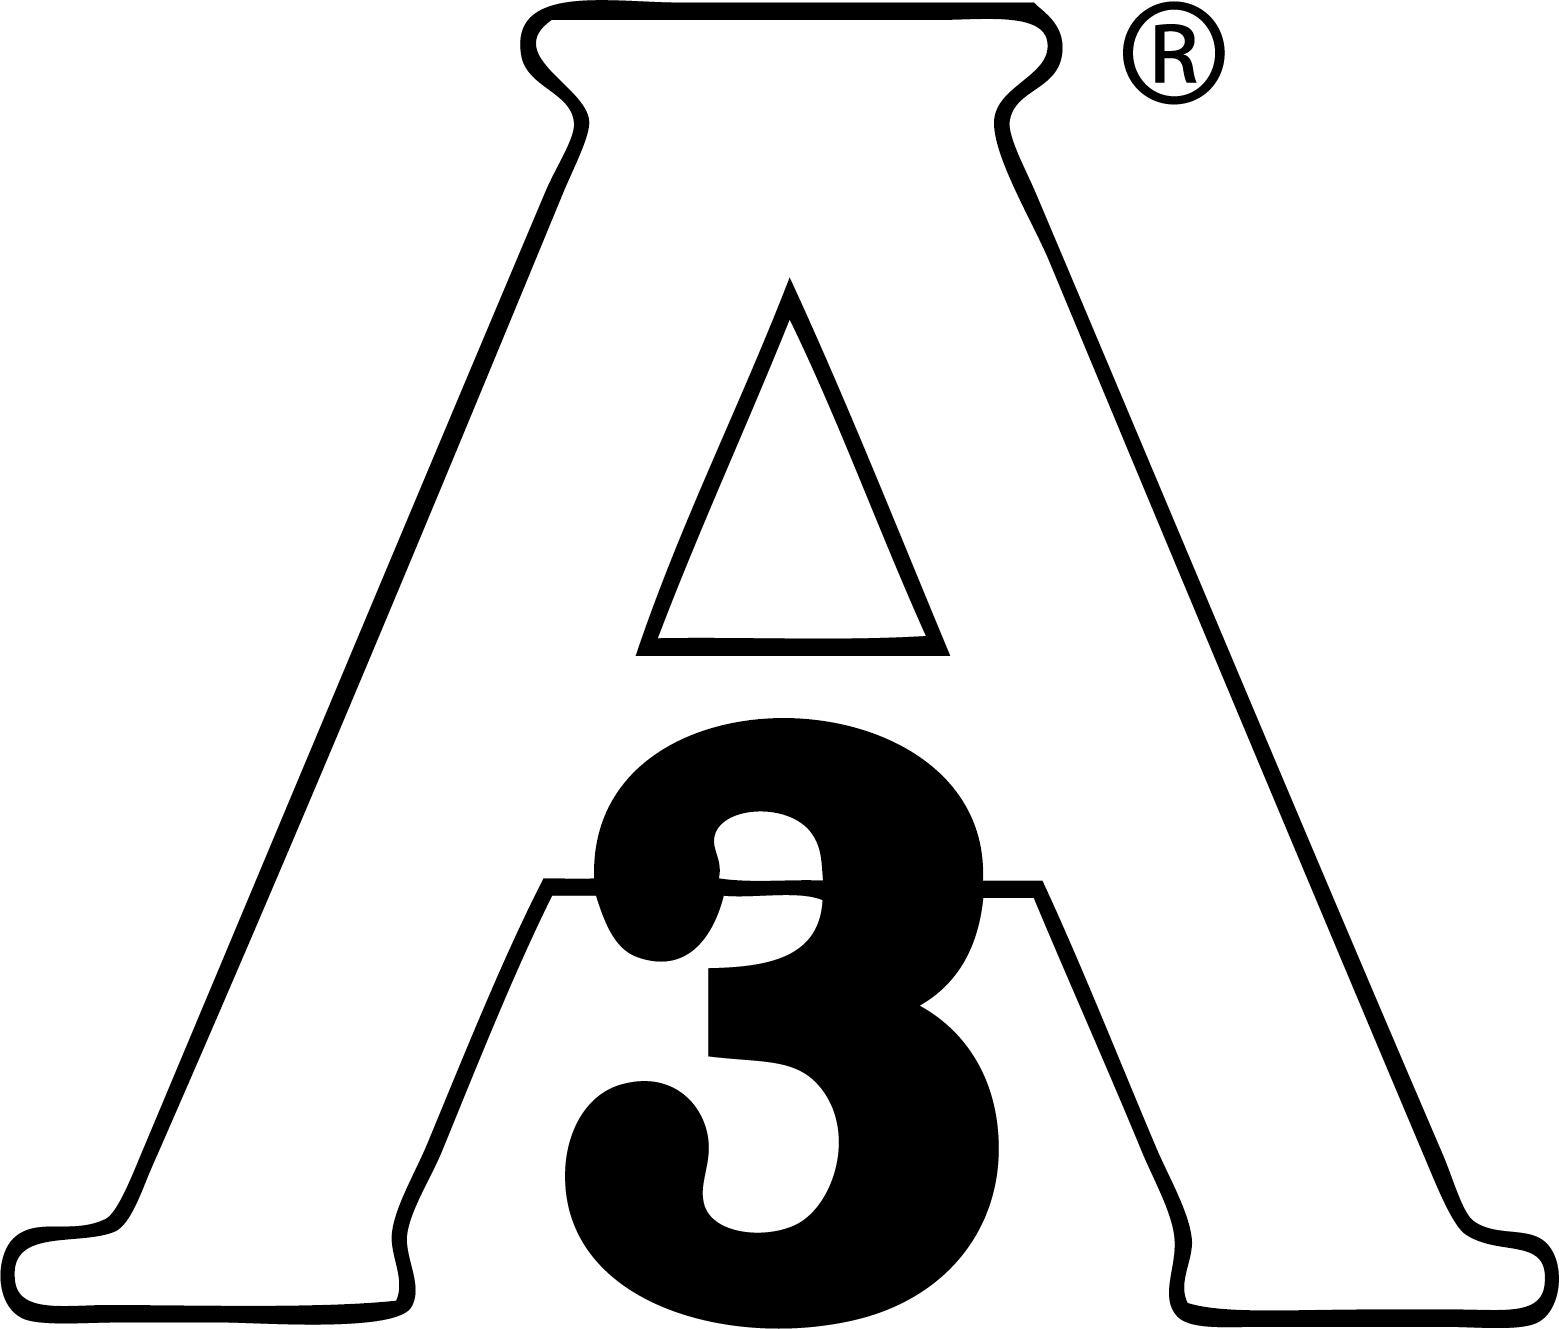 3-A logo